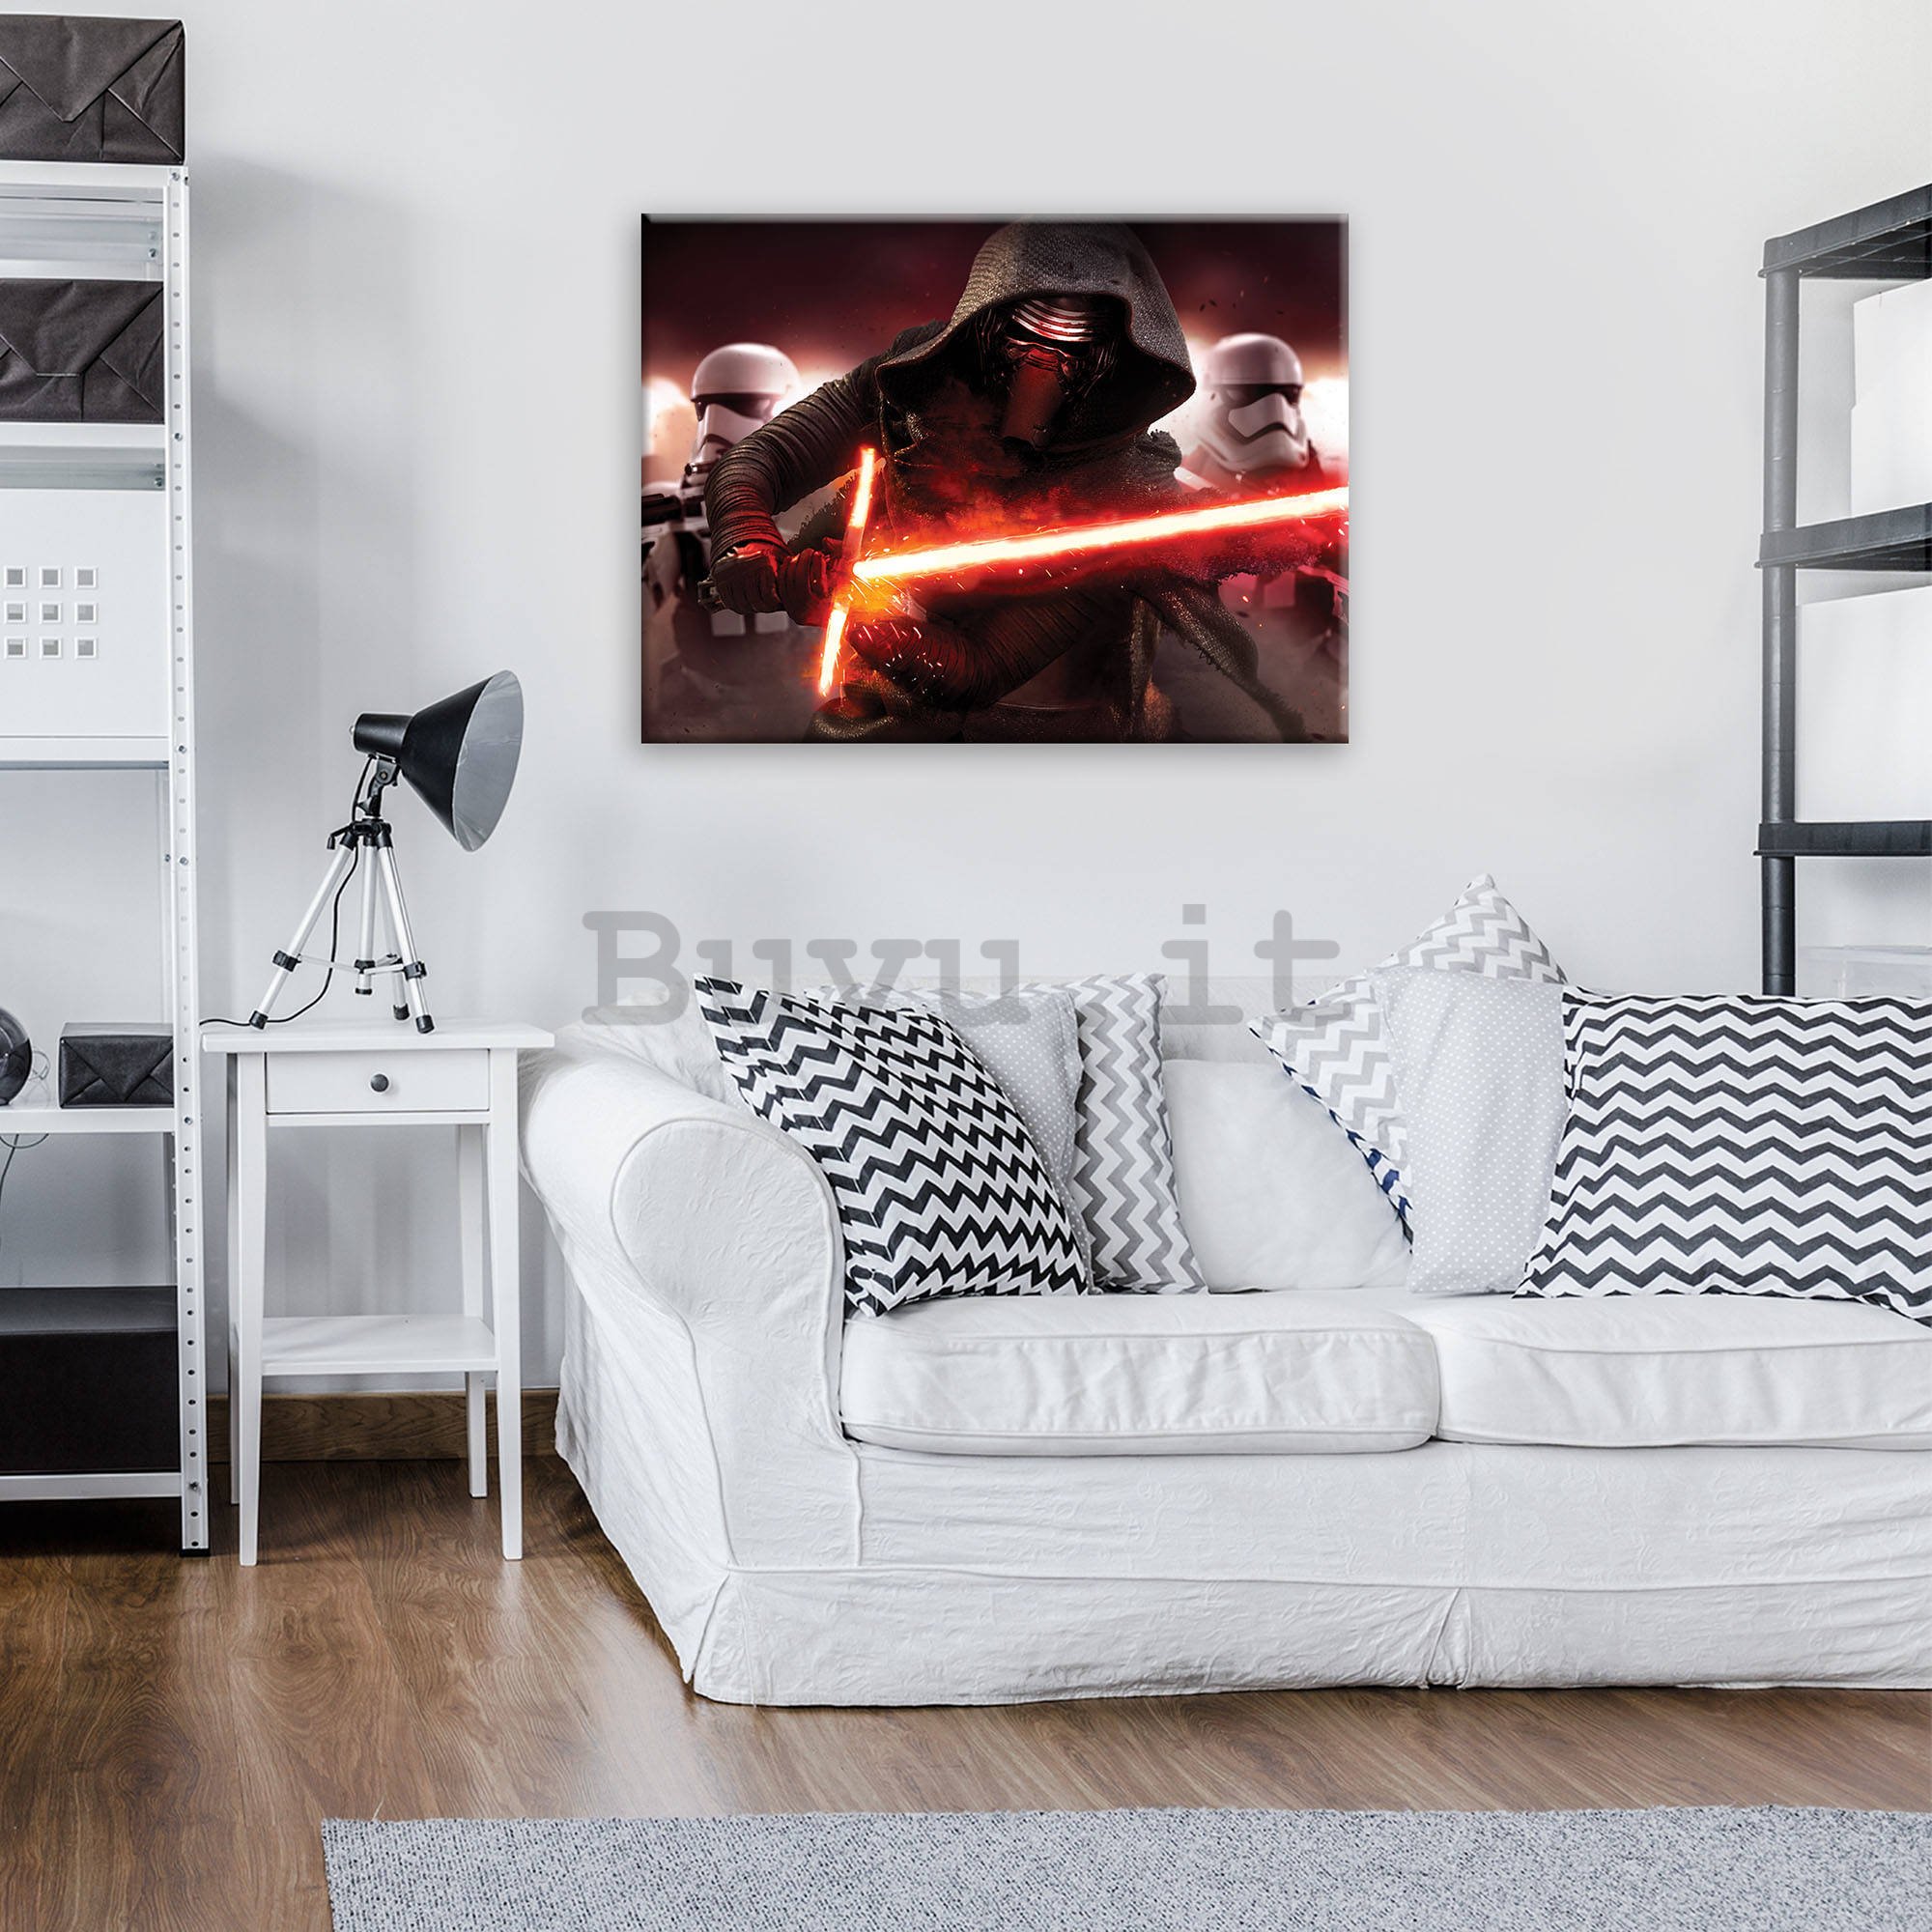 Quadro su tela: Star Wars Kylo Ren's Lightsaber - 80x60 cm